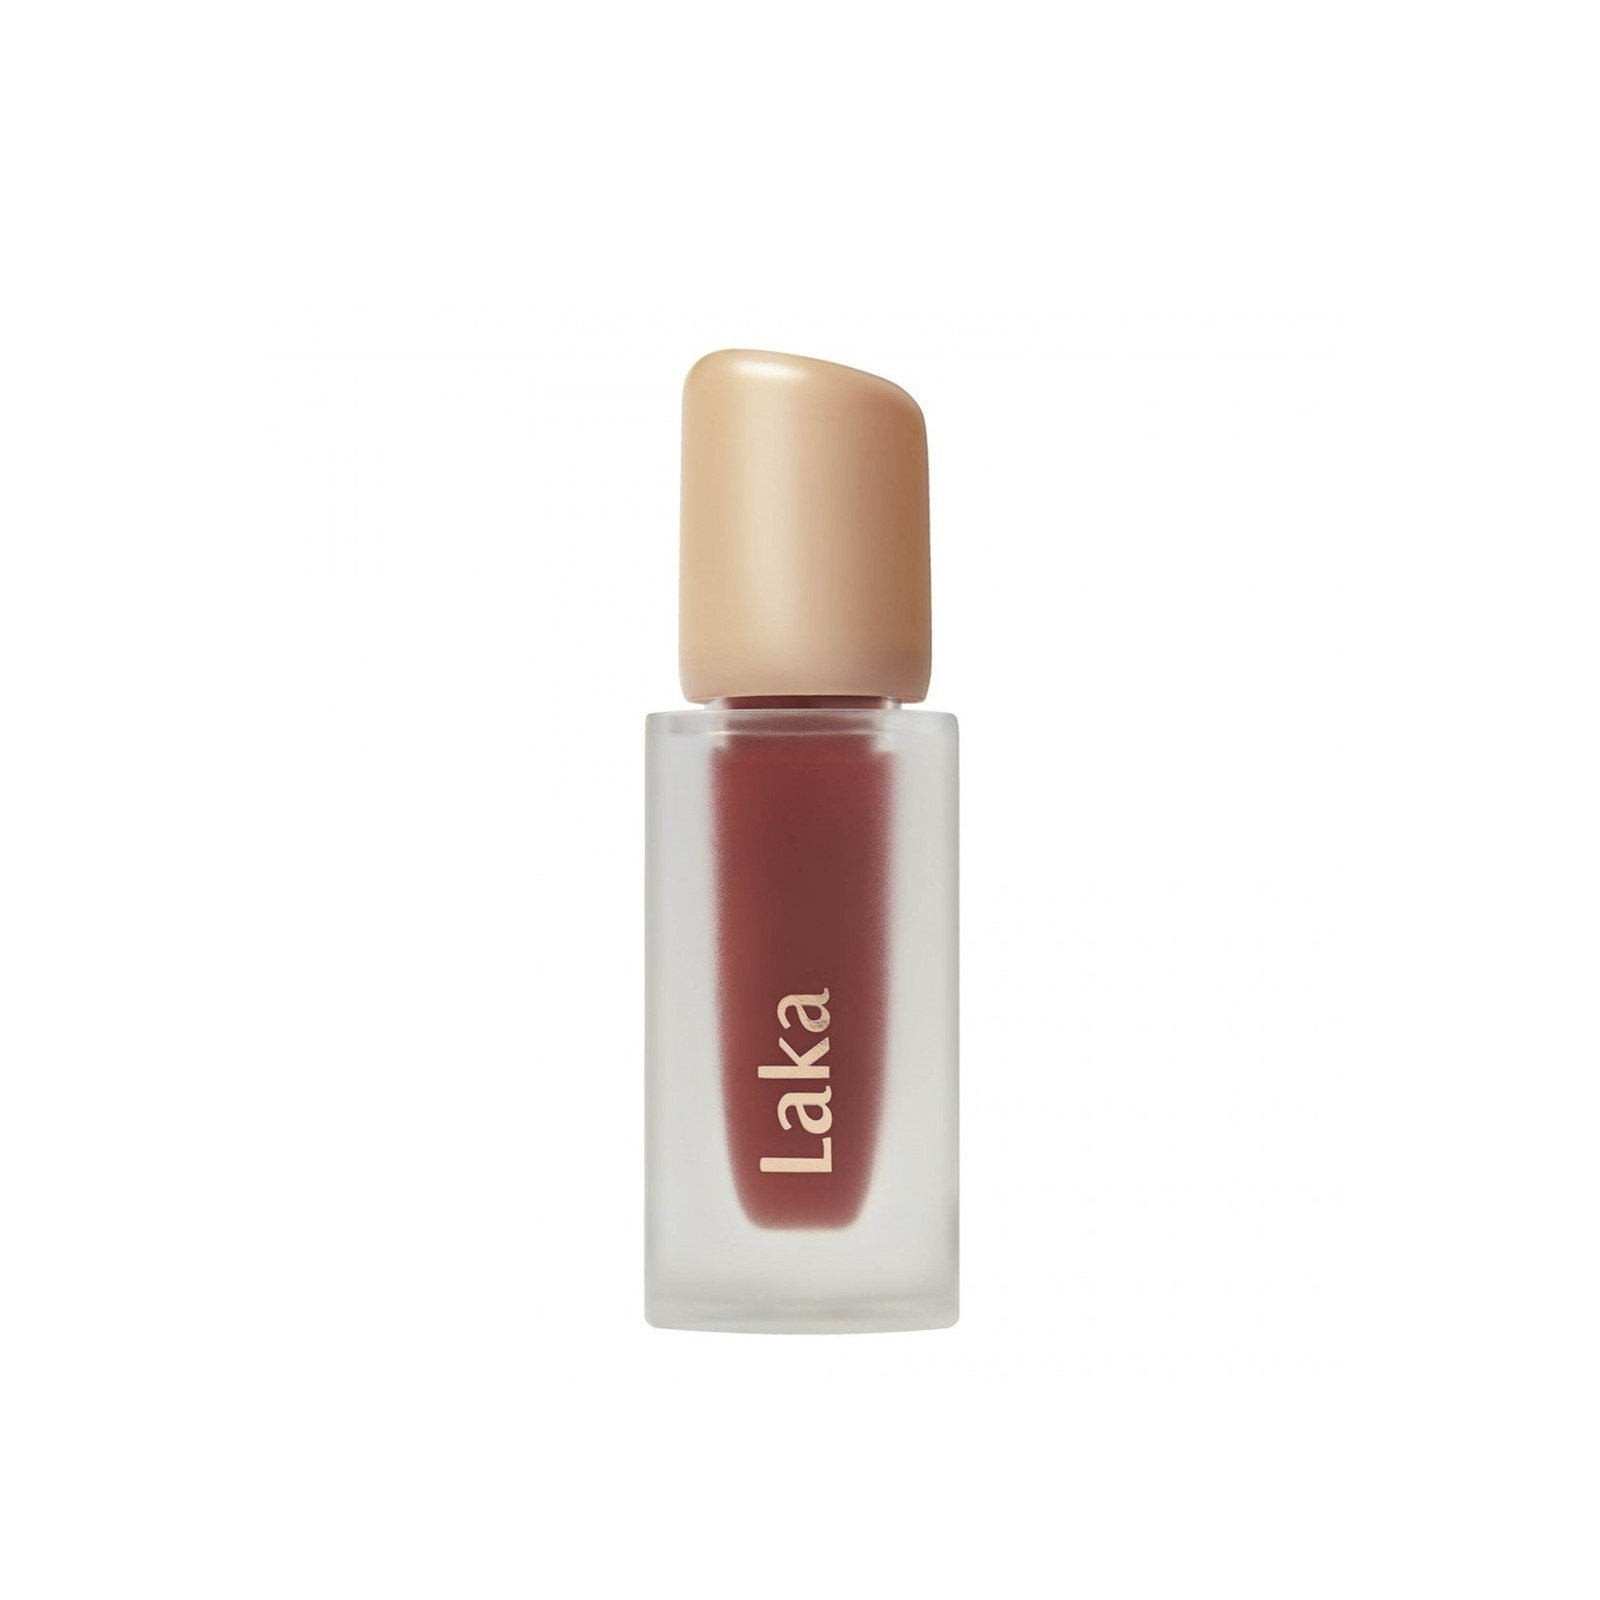 Laka Fruity Glam Lip Tint 104 Cherry 4.5g (0.15 oz)